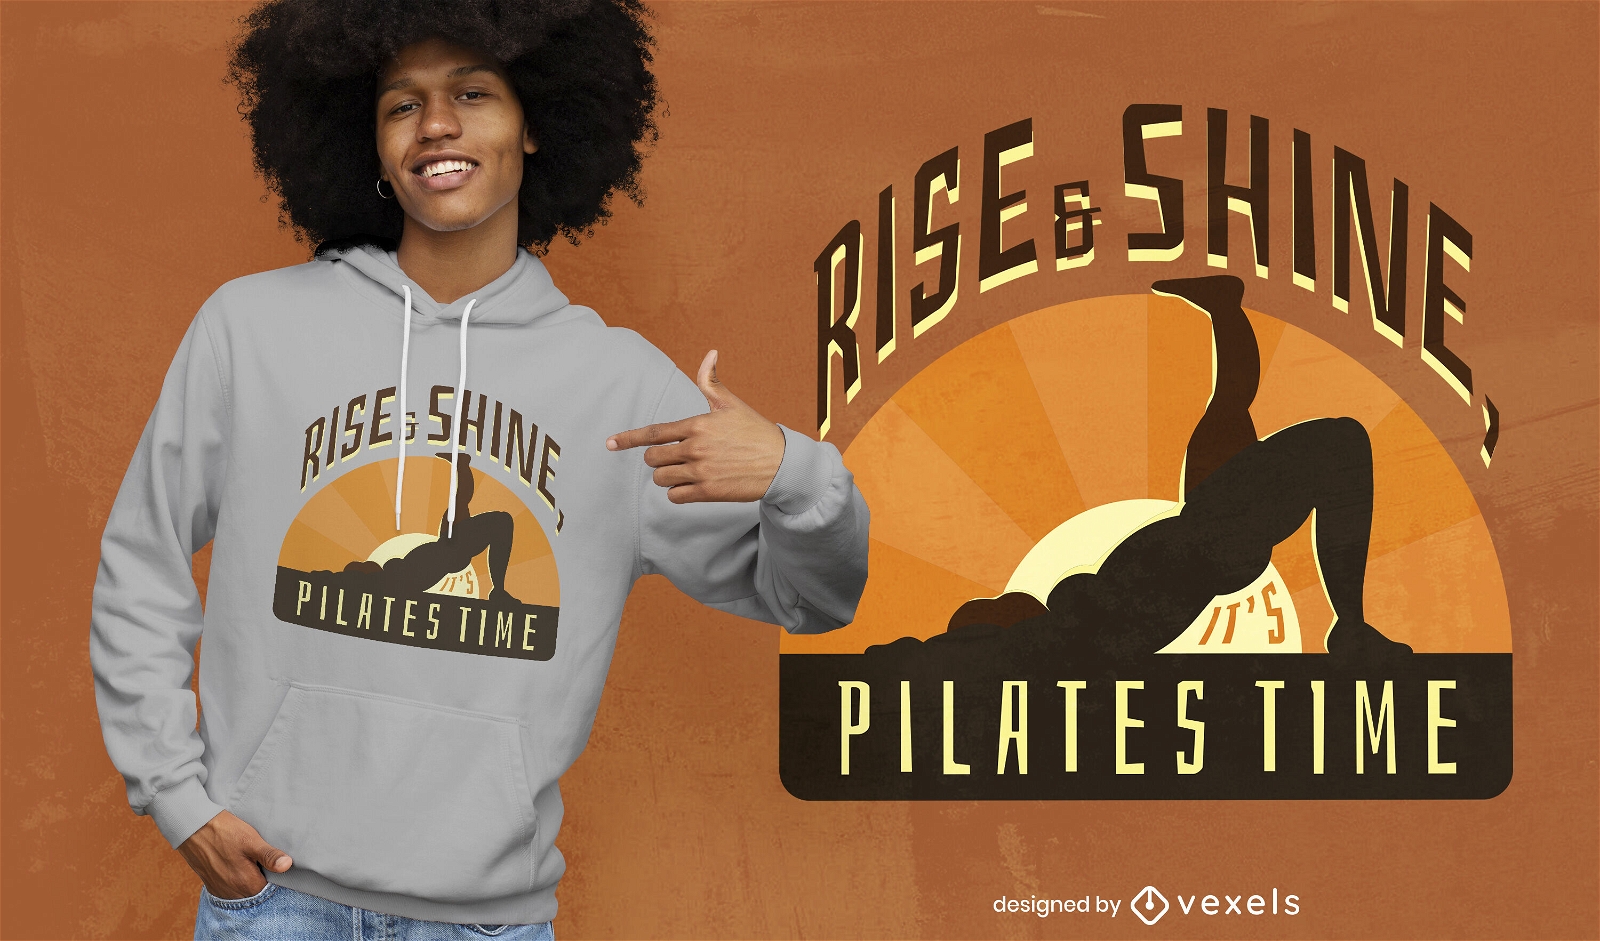 Rise & Shine Pilates Zitat T-Shirt Design